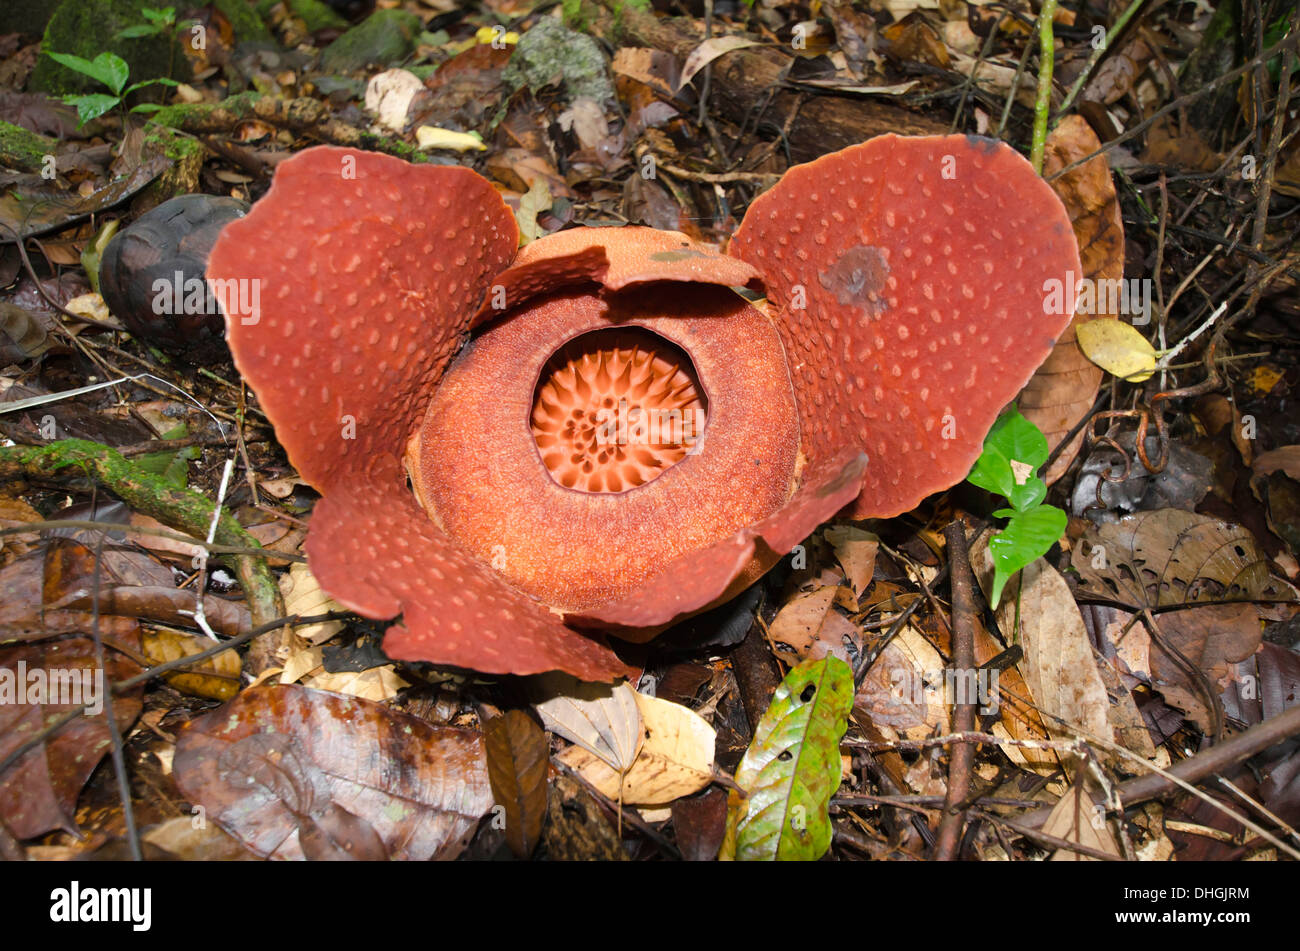 Rafflesia arnoldii a Parasitic flowering plant just openening Gunung Gading National Park Borneo Stock Photo